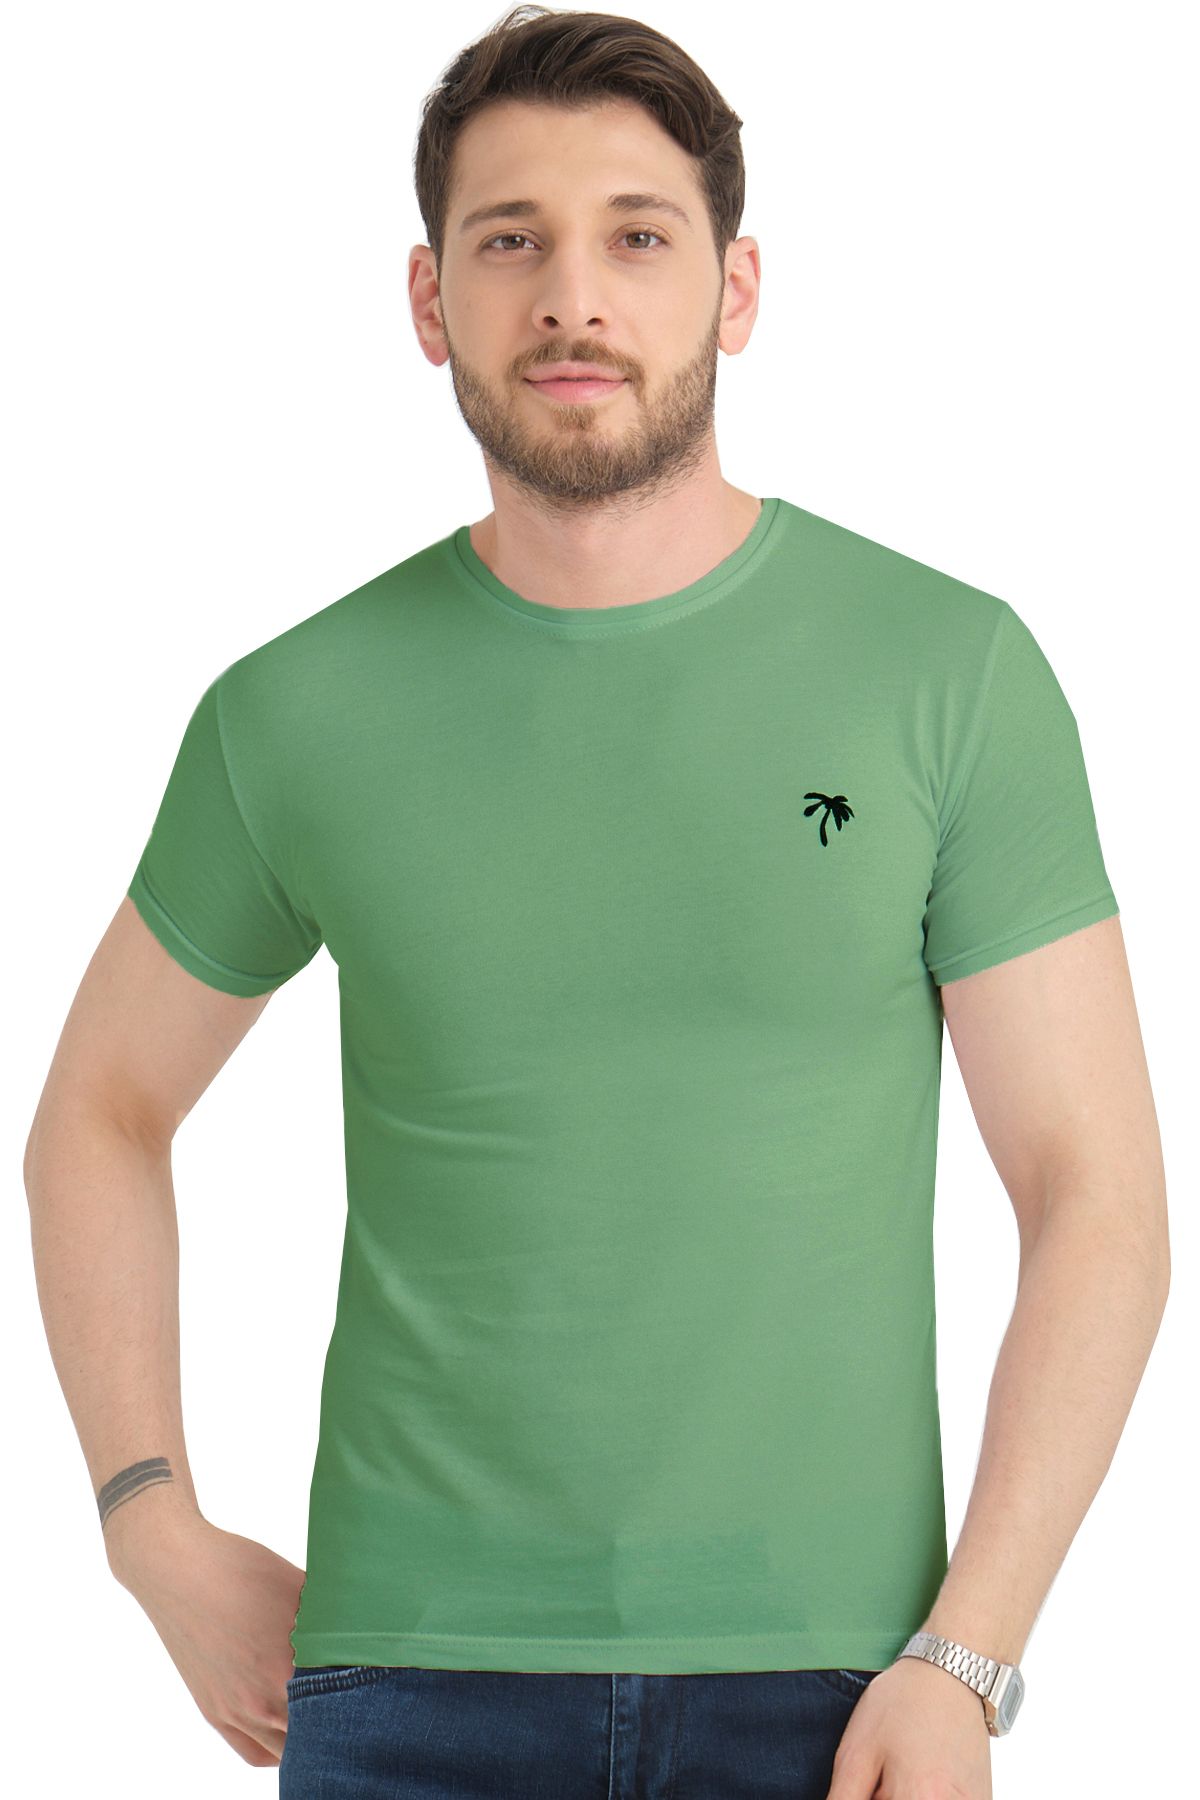 Varetta Erkek Pastel Yeşil Bisiklet Yaka Likralı Pamuklu Kısa Kollu T shirt